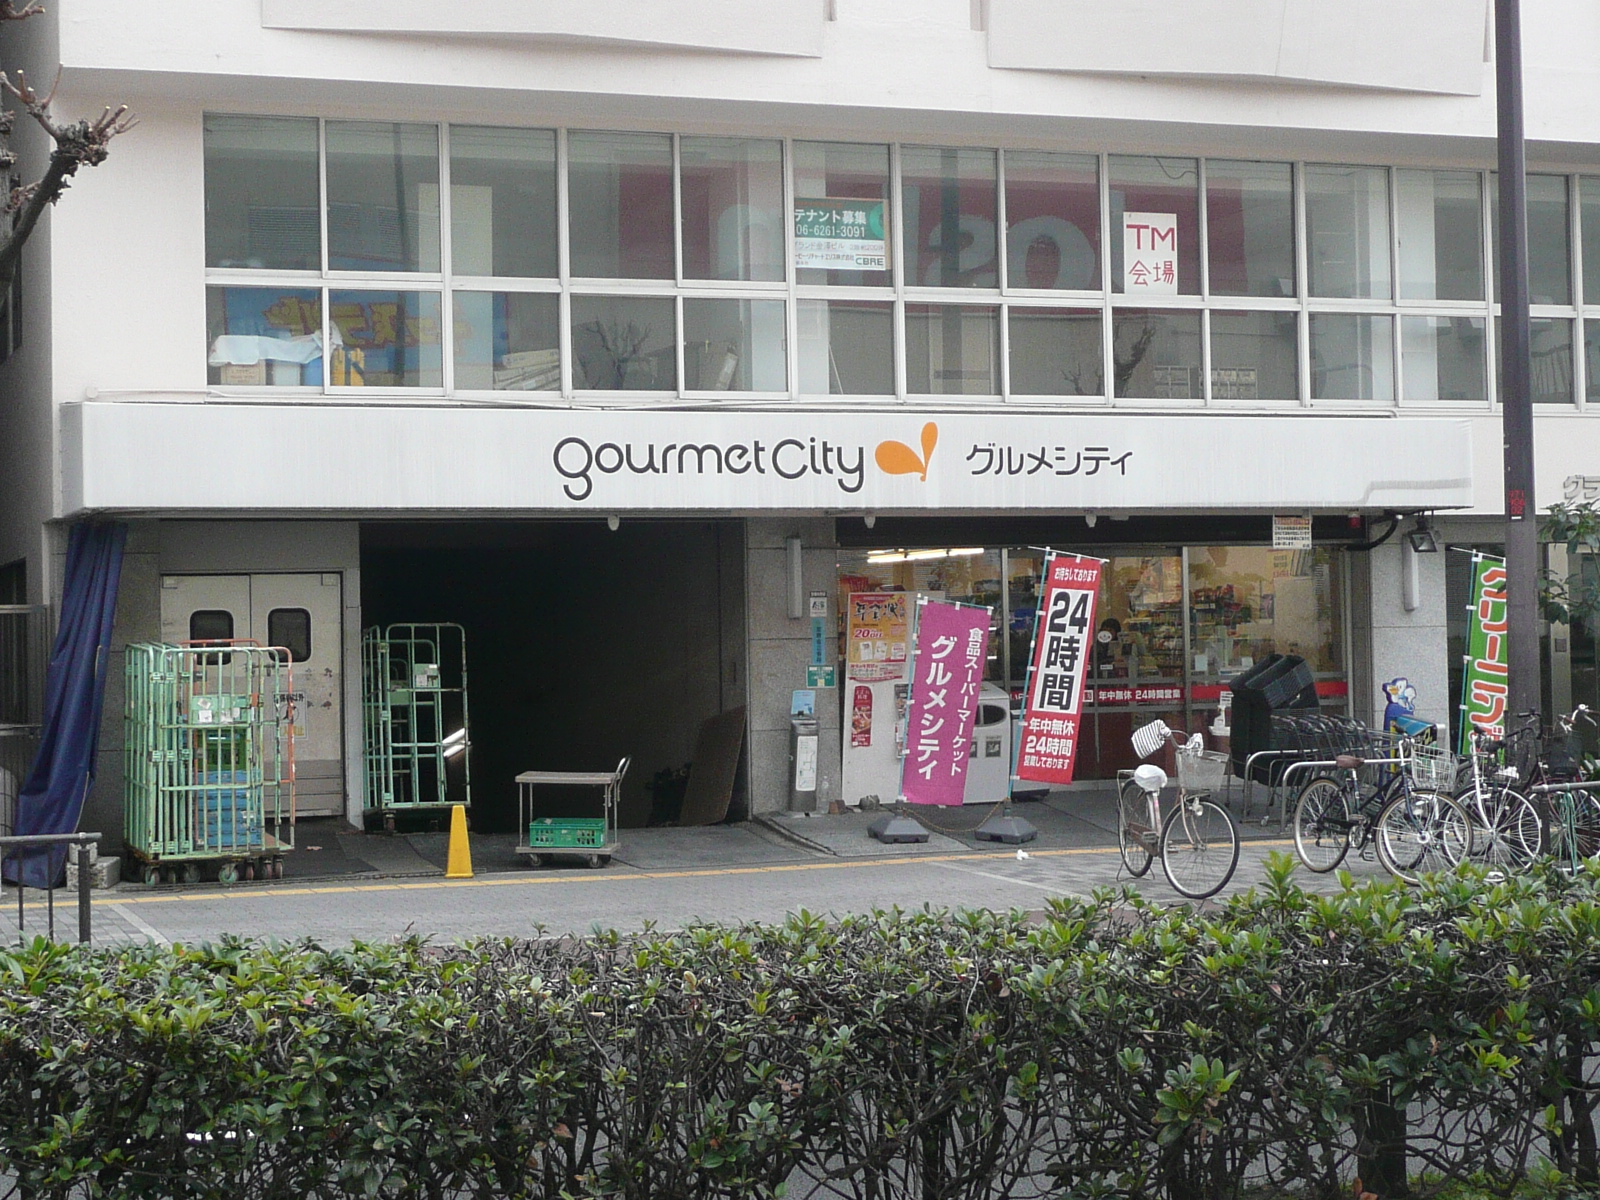 Supermarket. 188m until Gourmet City Shin-Osaka store (Super)